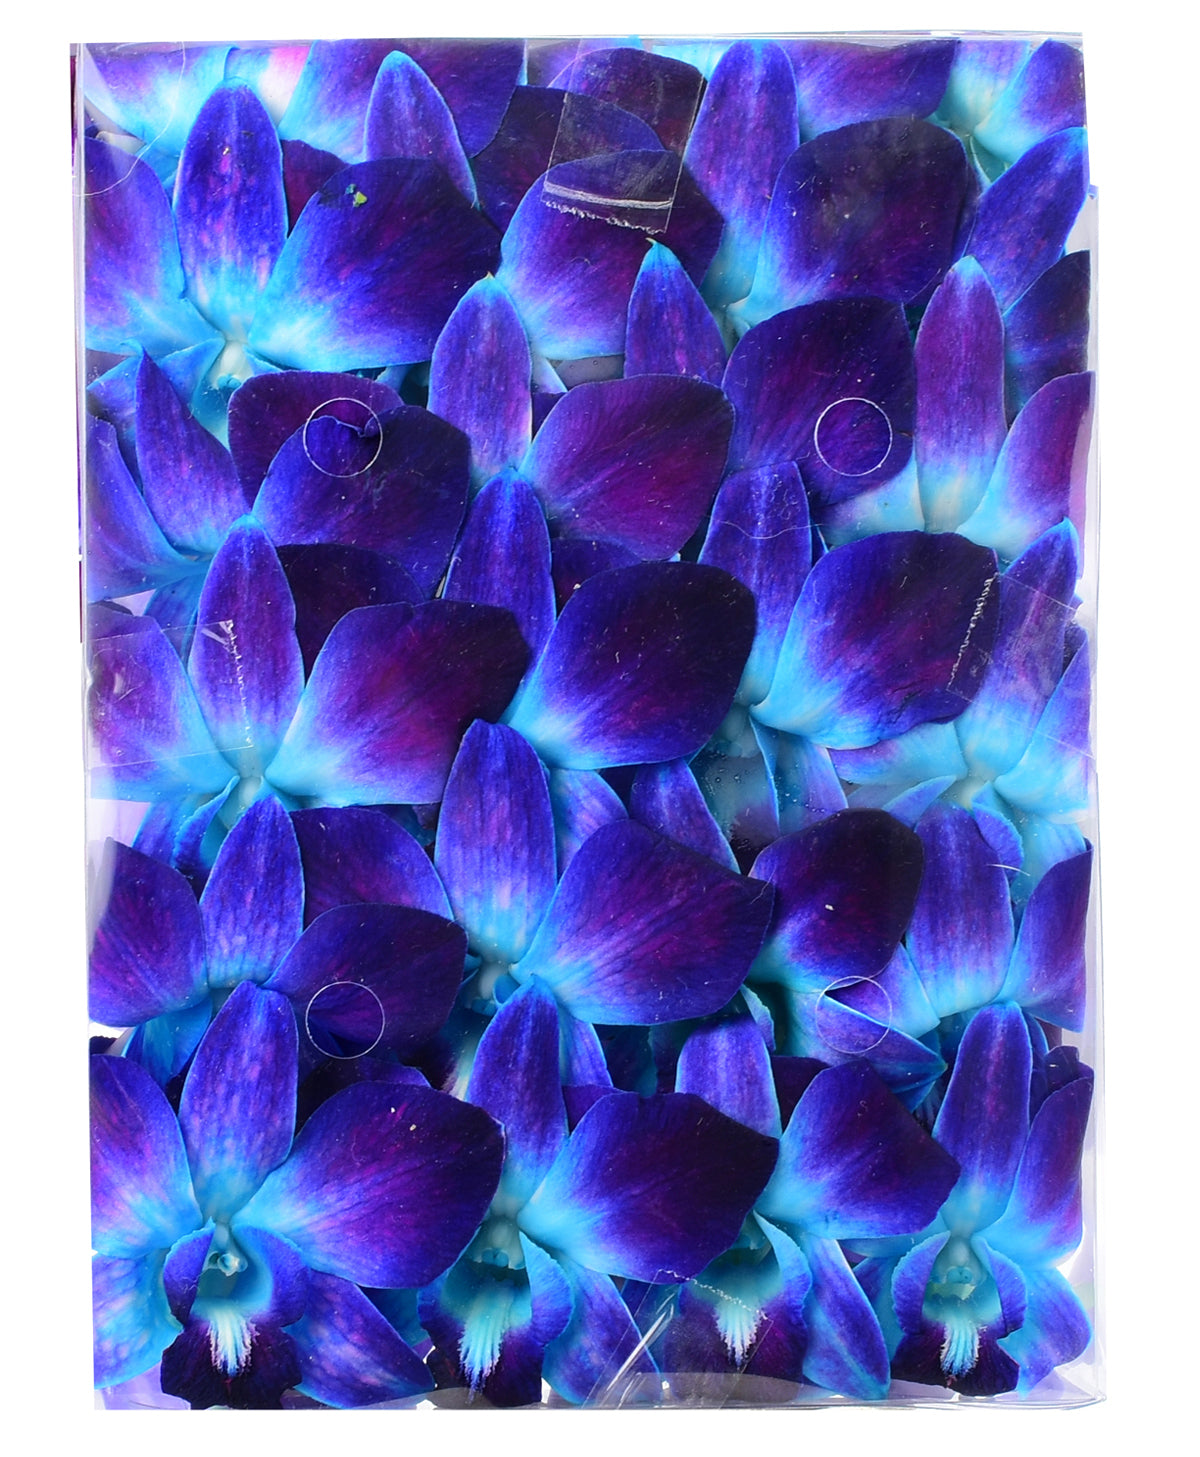 50 Blue DYED Orchid Loose Bloom Fresh Cut Flowers Bundle Build A Box